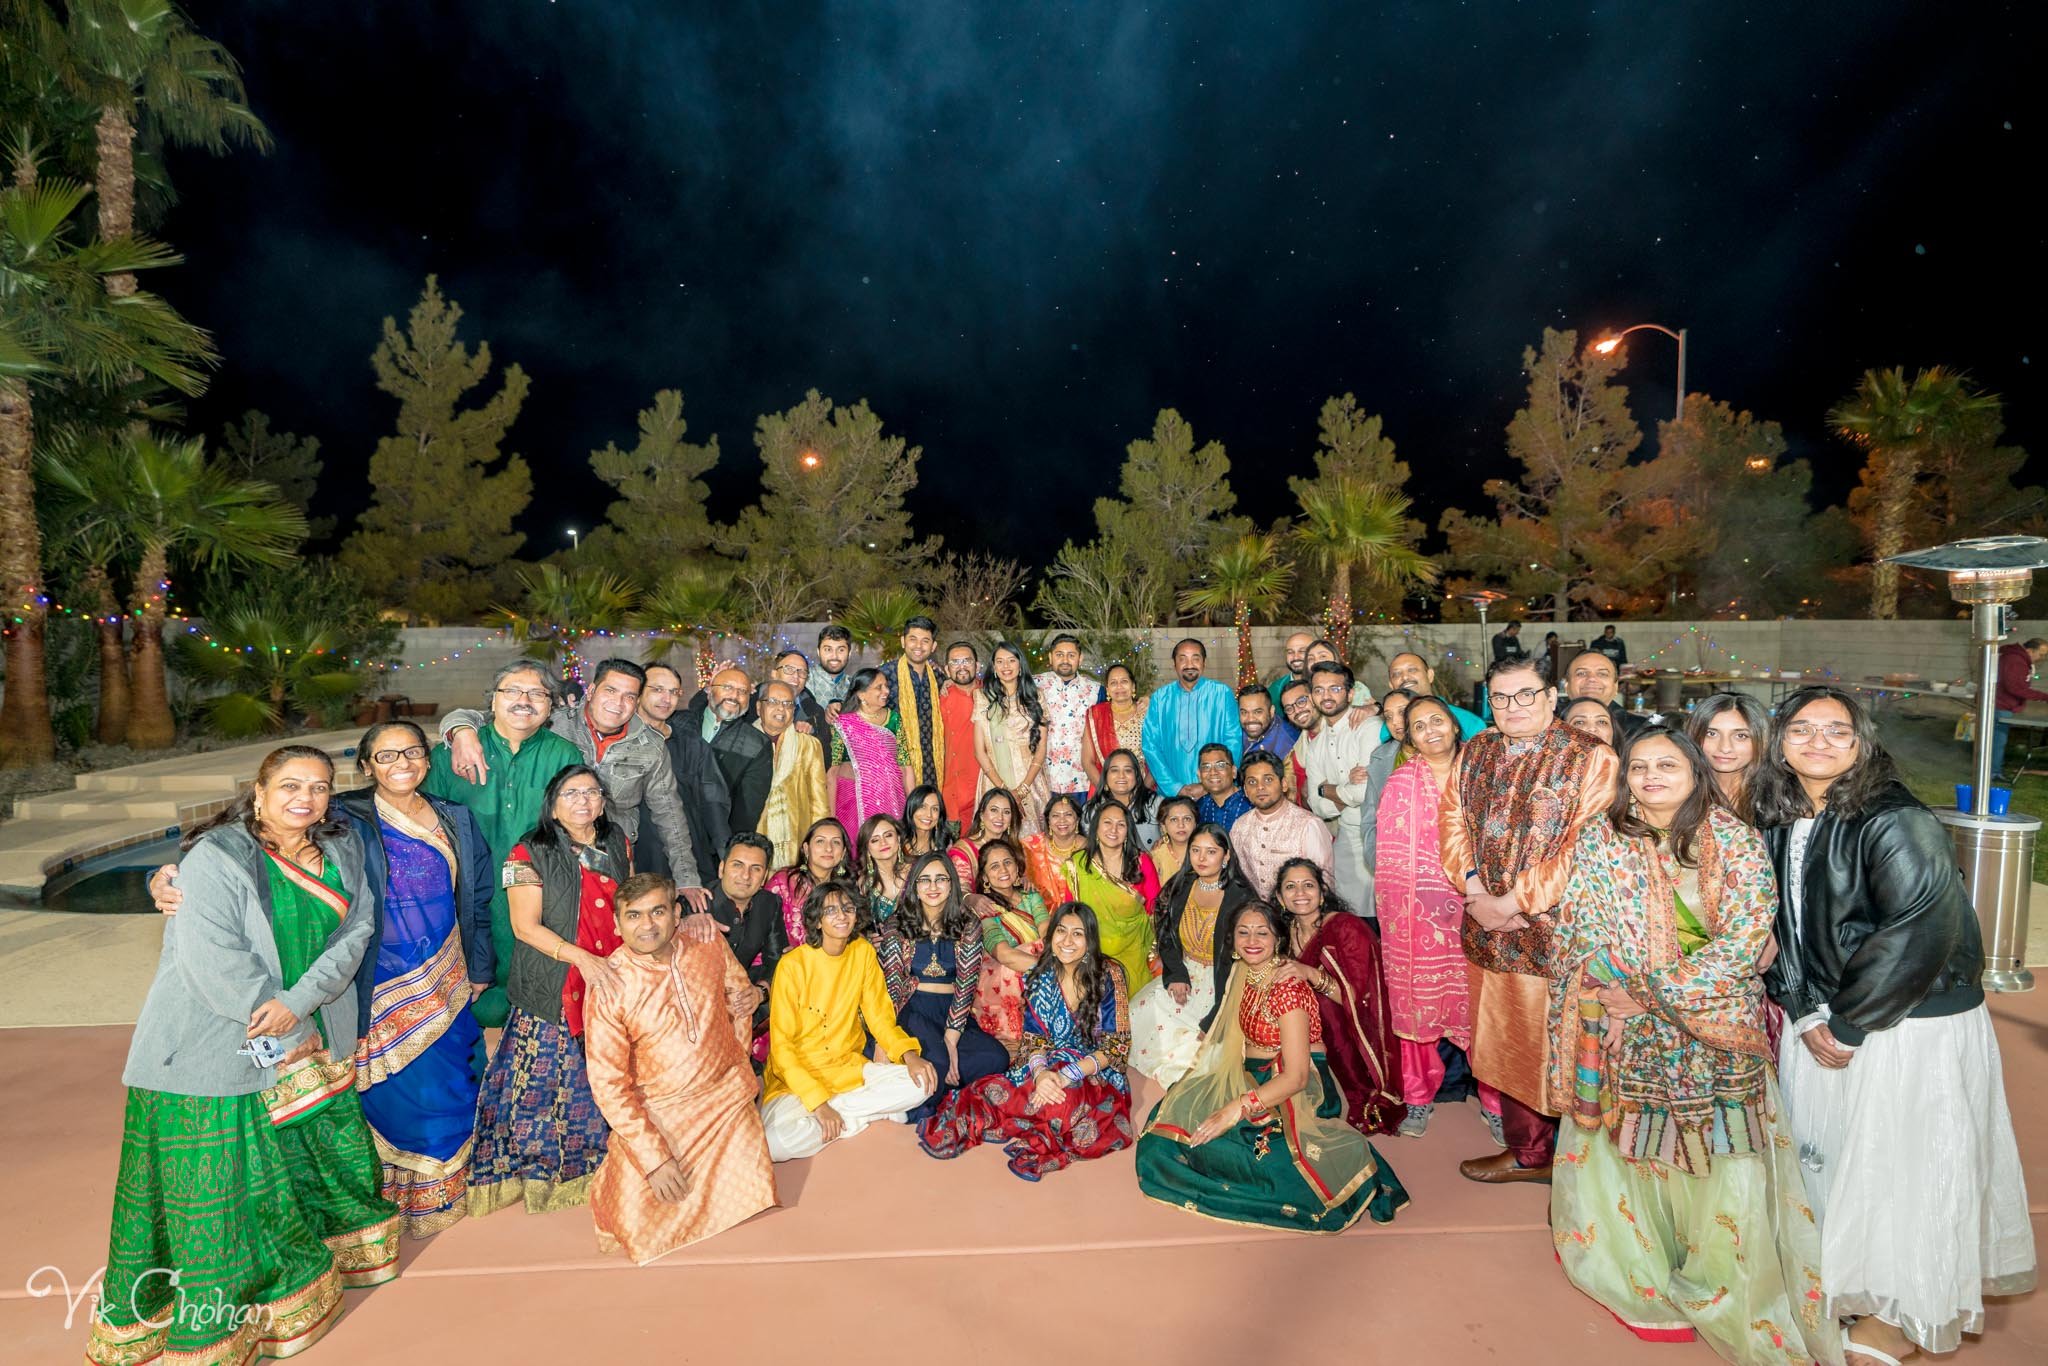 2022-02-04-Hely-&-Parth-Garba-Night-Indian-Wedding-Vik-Chohan-Photography-Photo-Booth-Social-Media-VCP-159.jpg